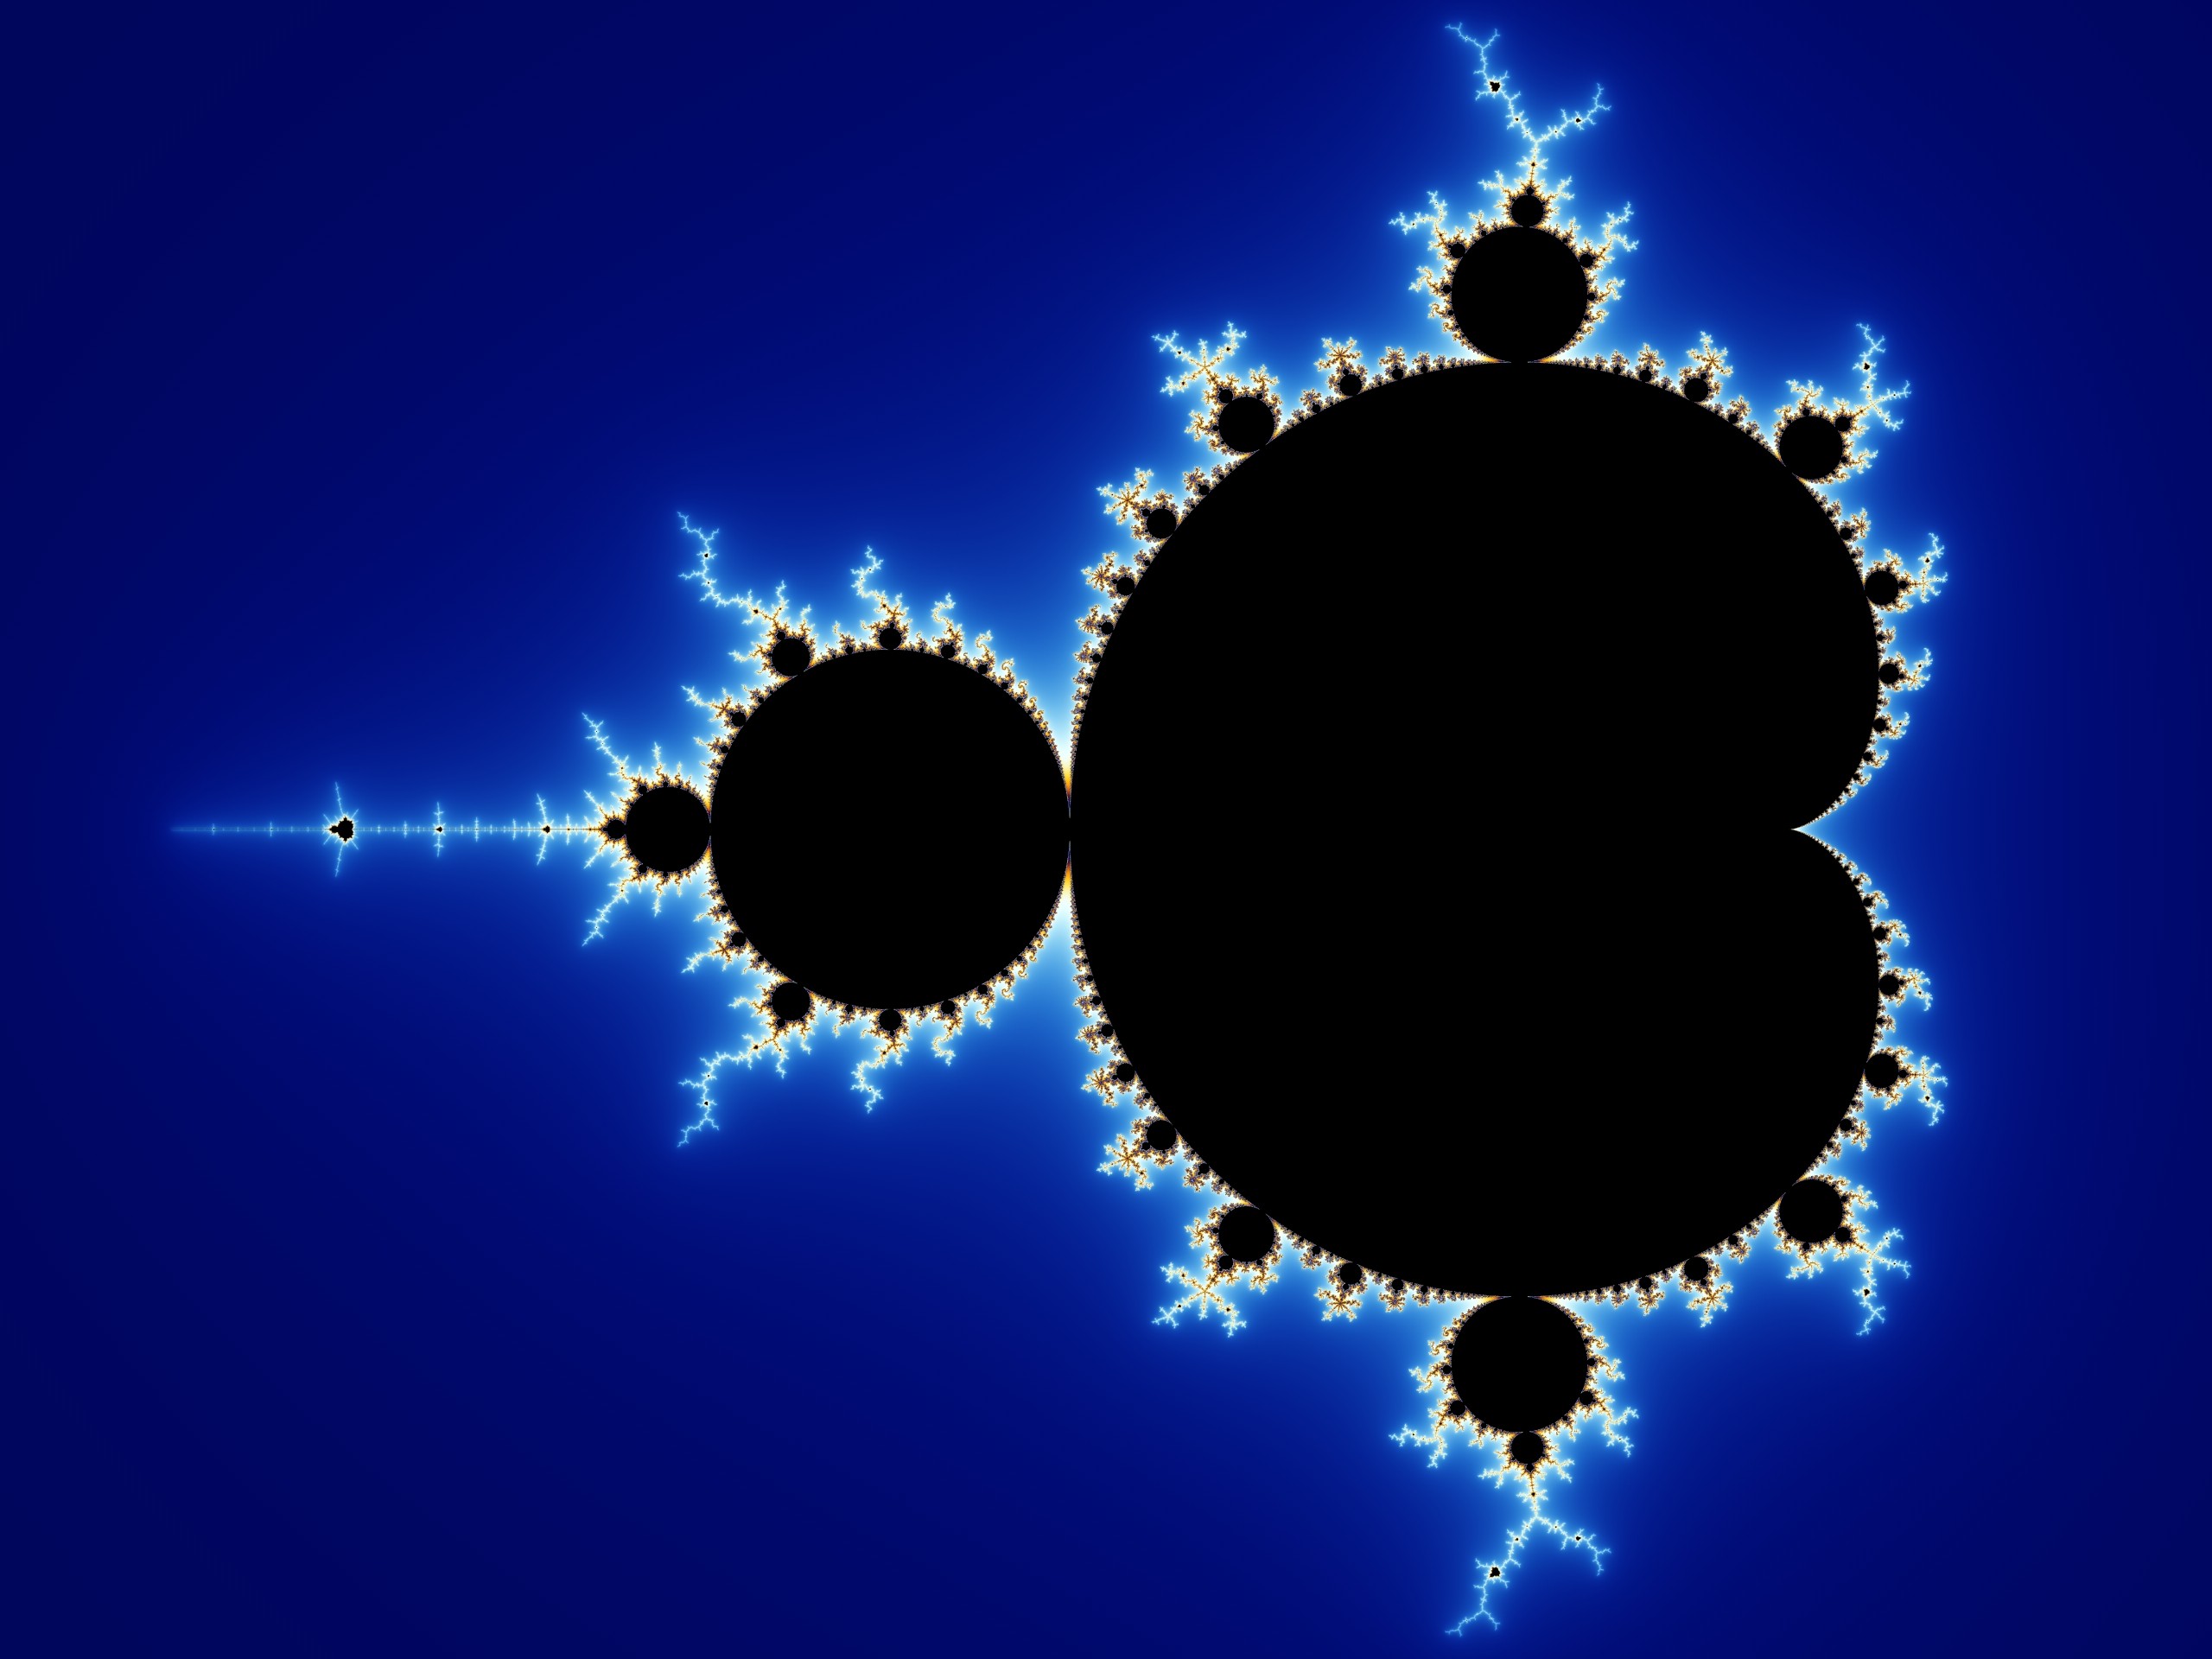 General 2560x1920 simple background abstract blue background digital art mathematical fractal Mandelbrot set